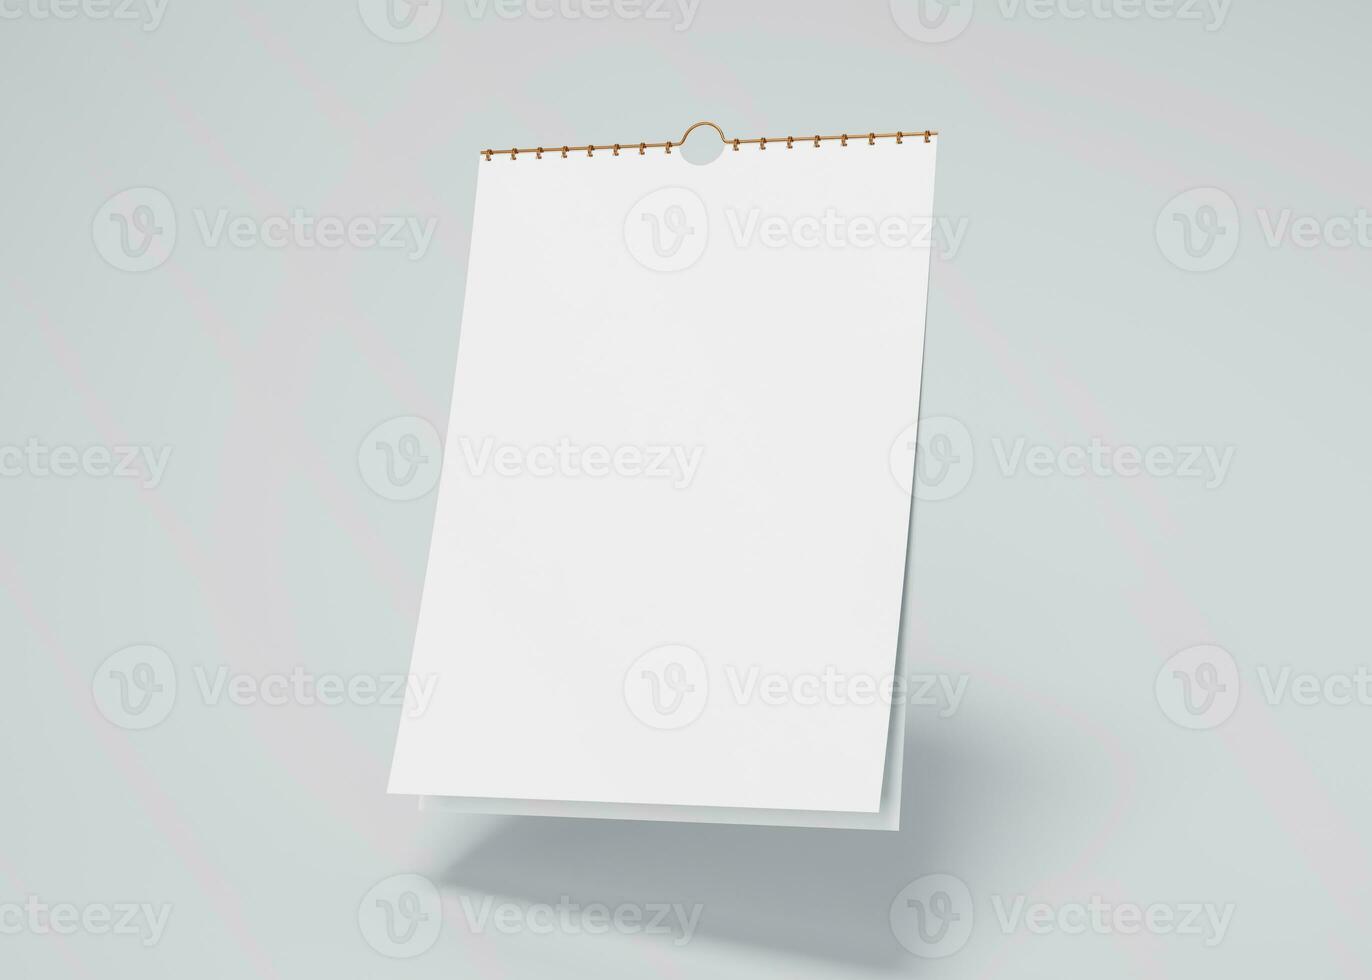 potrait desk calendar with blank of paper suitable for calendar design presentation photo